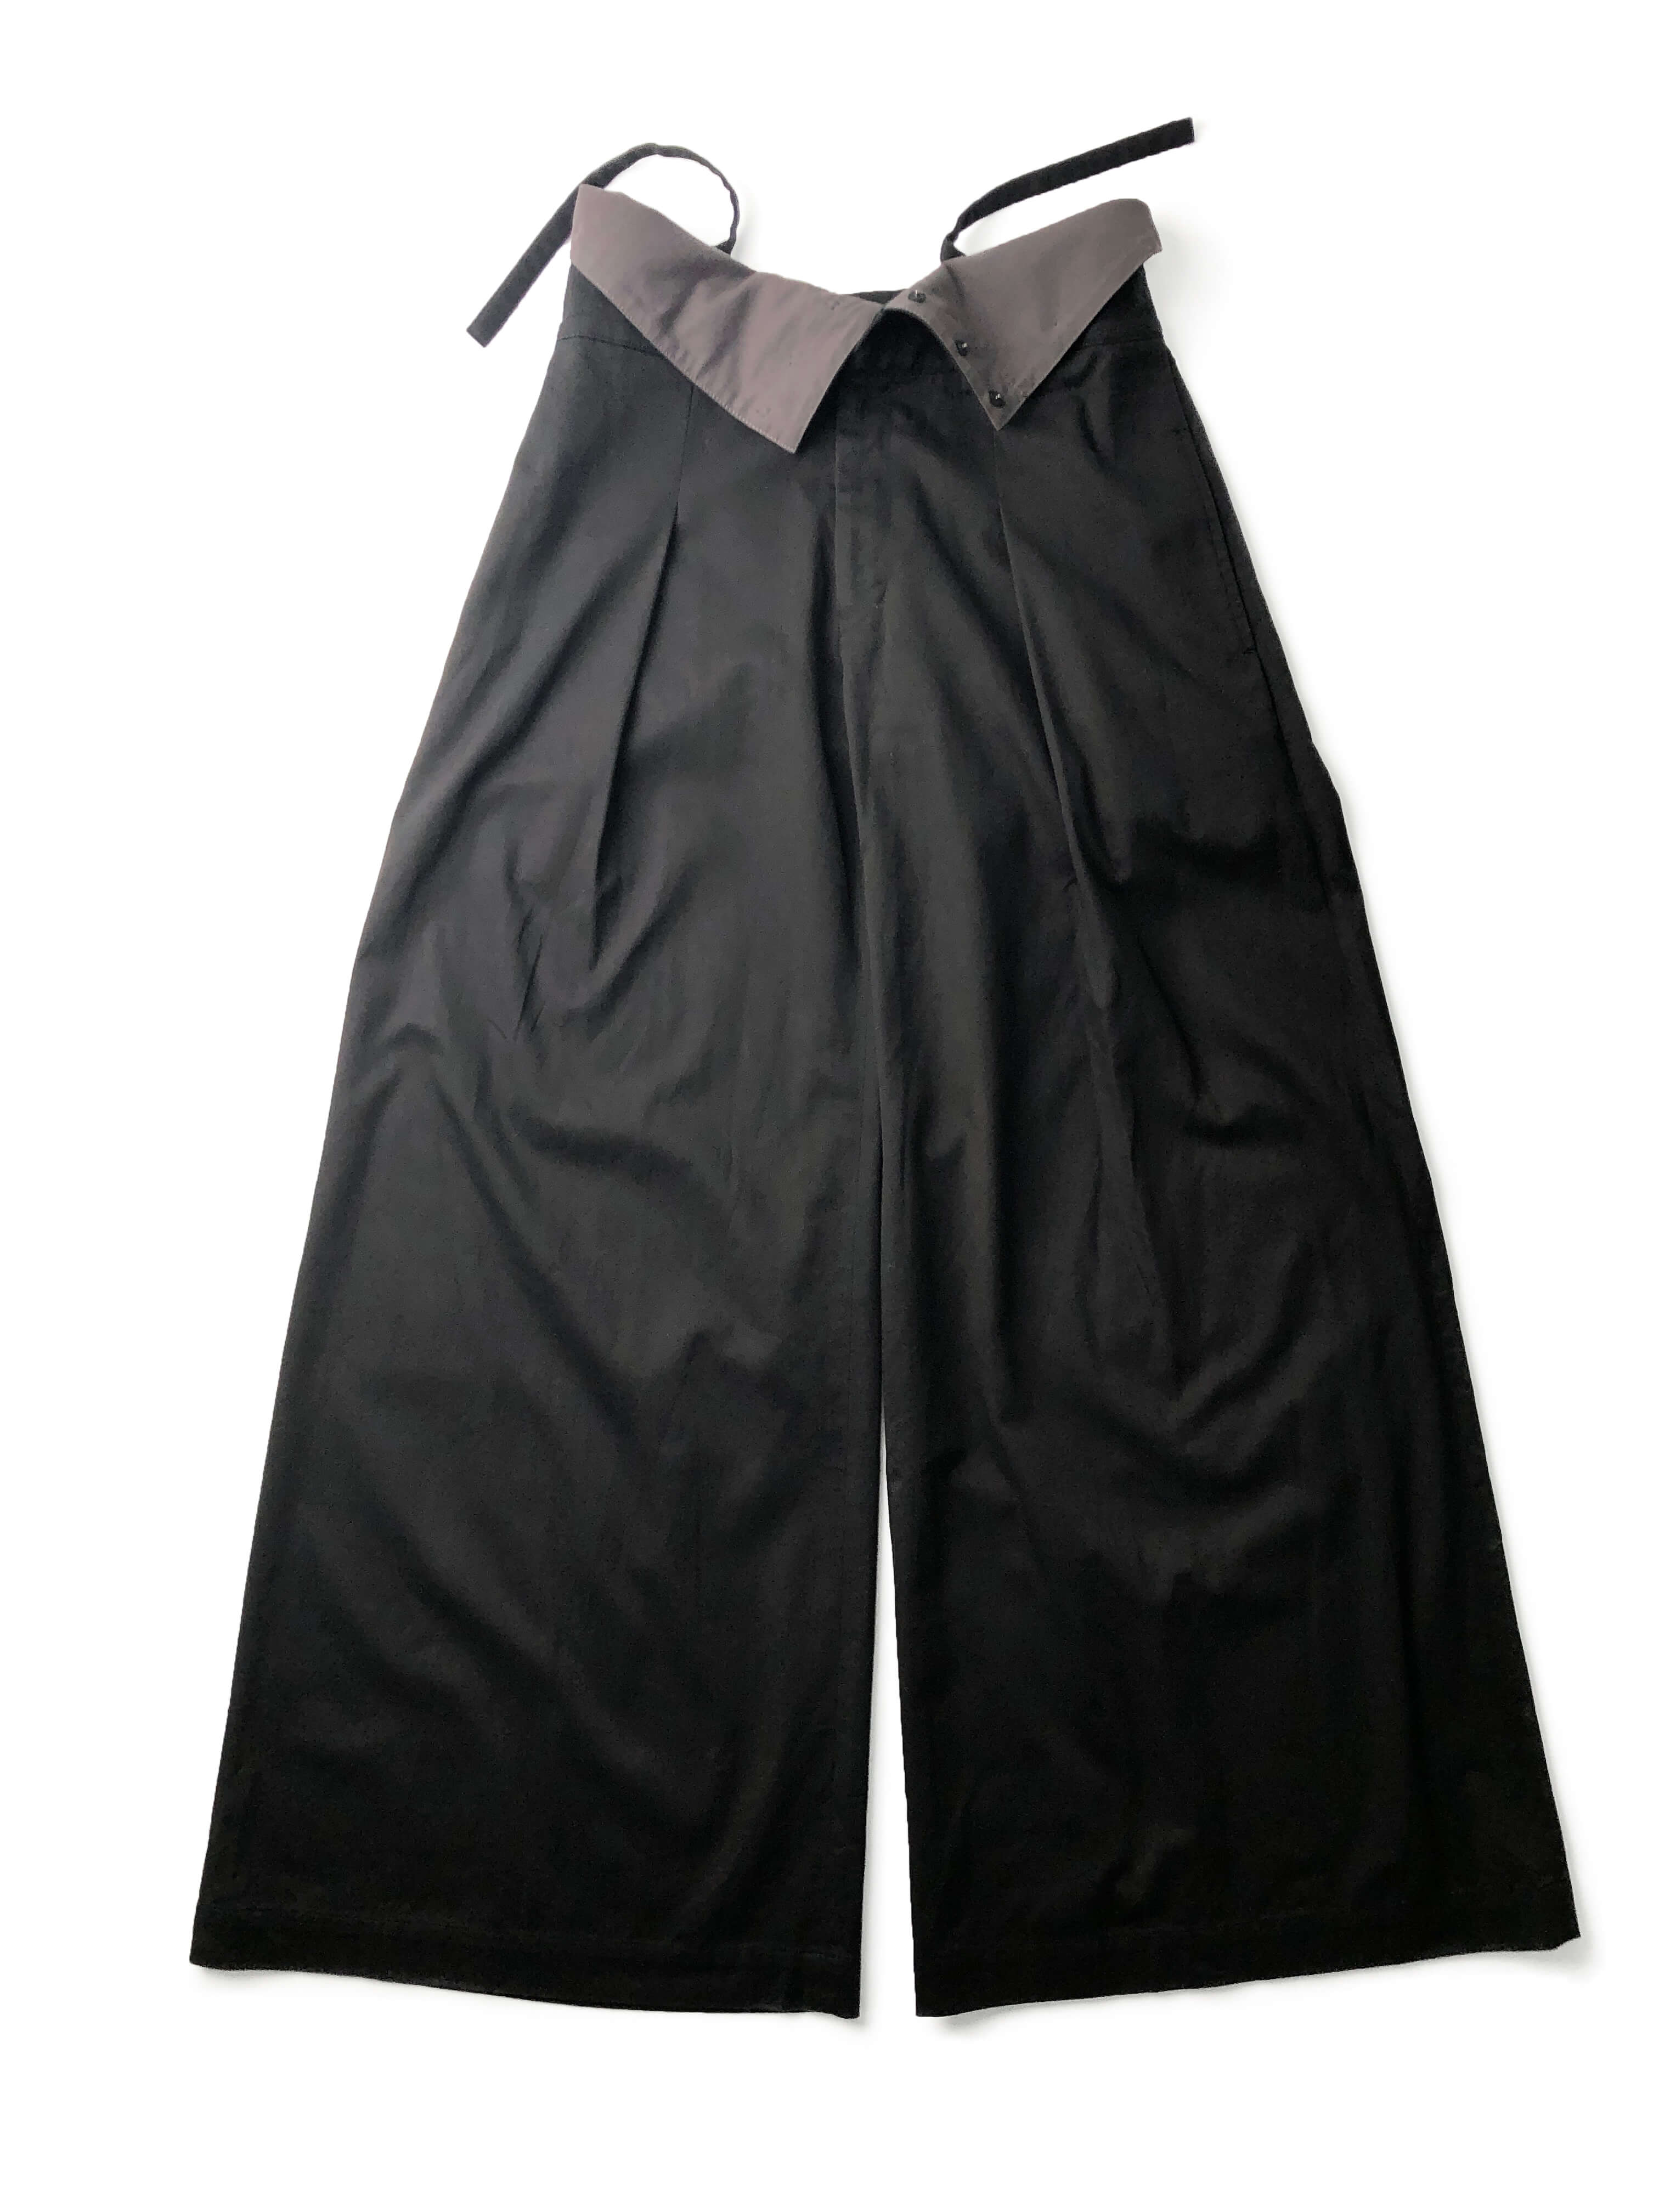 REGULATION Yohji Yamamoto hakama pants